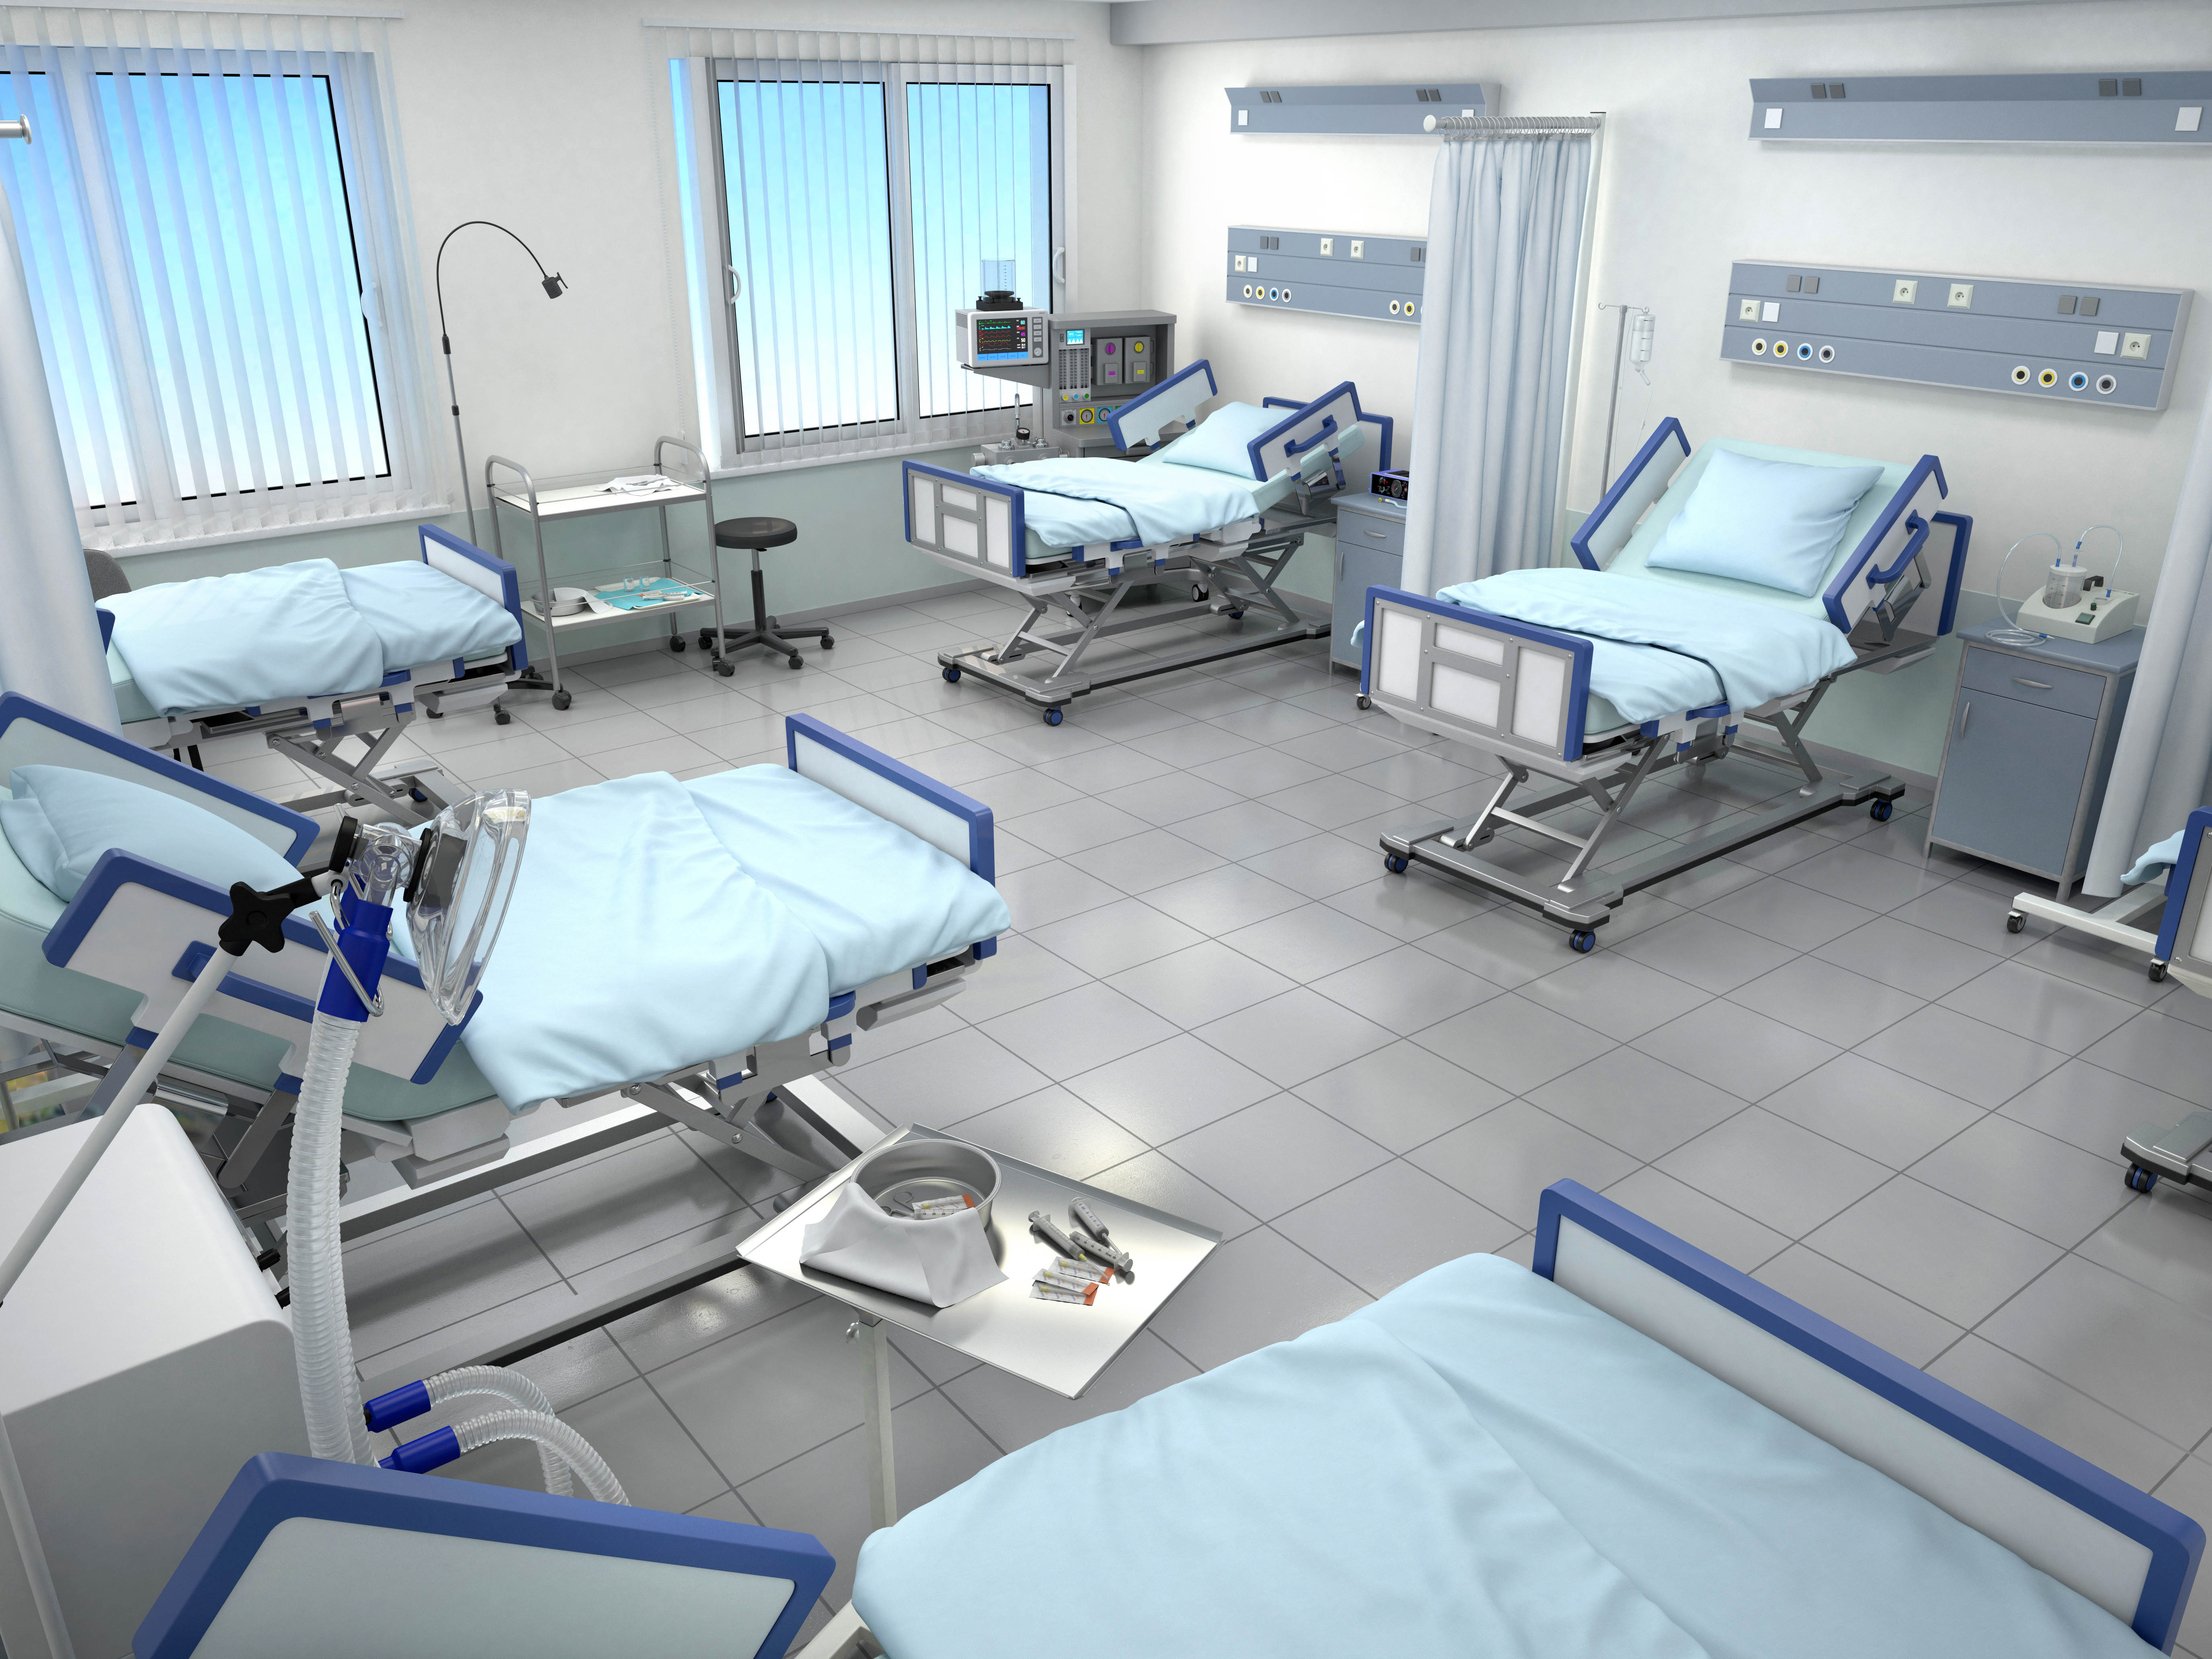 50 bedded hospital business plan